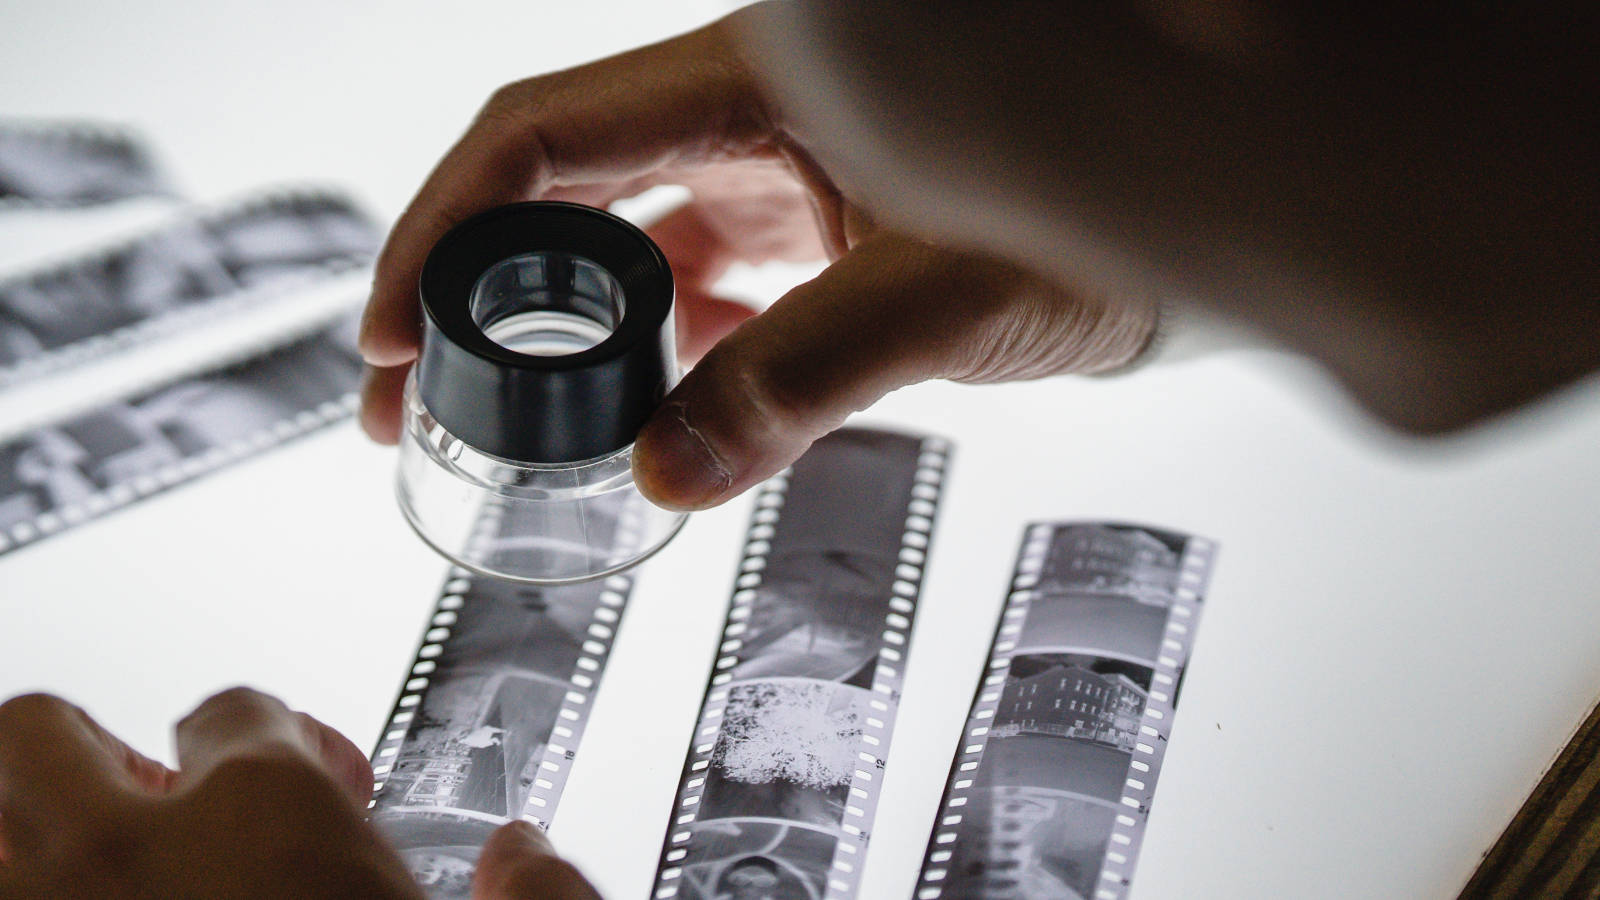 The origins of 35mm camera film